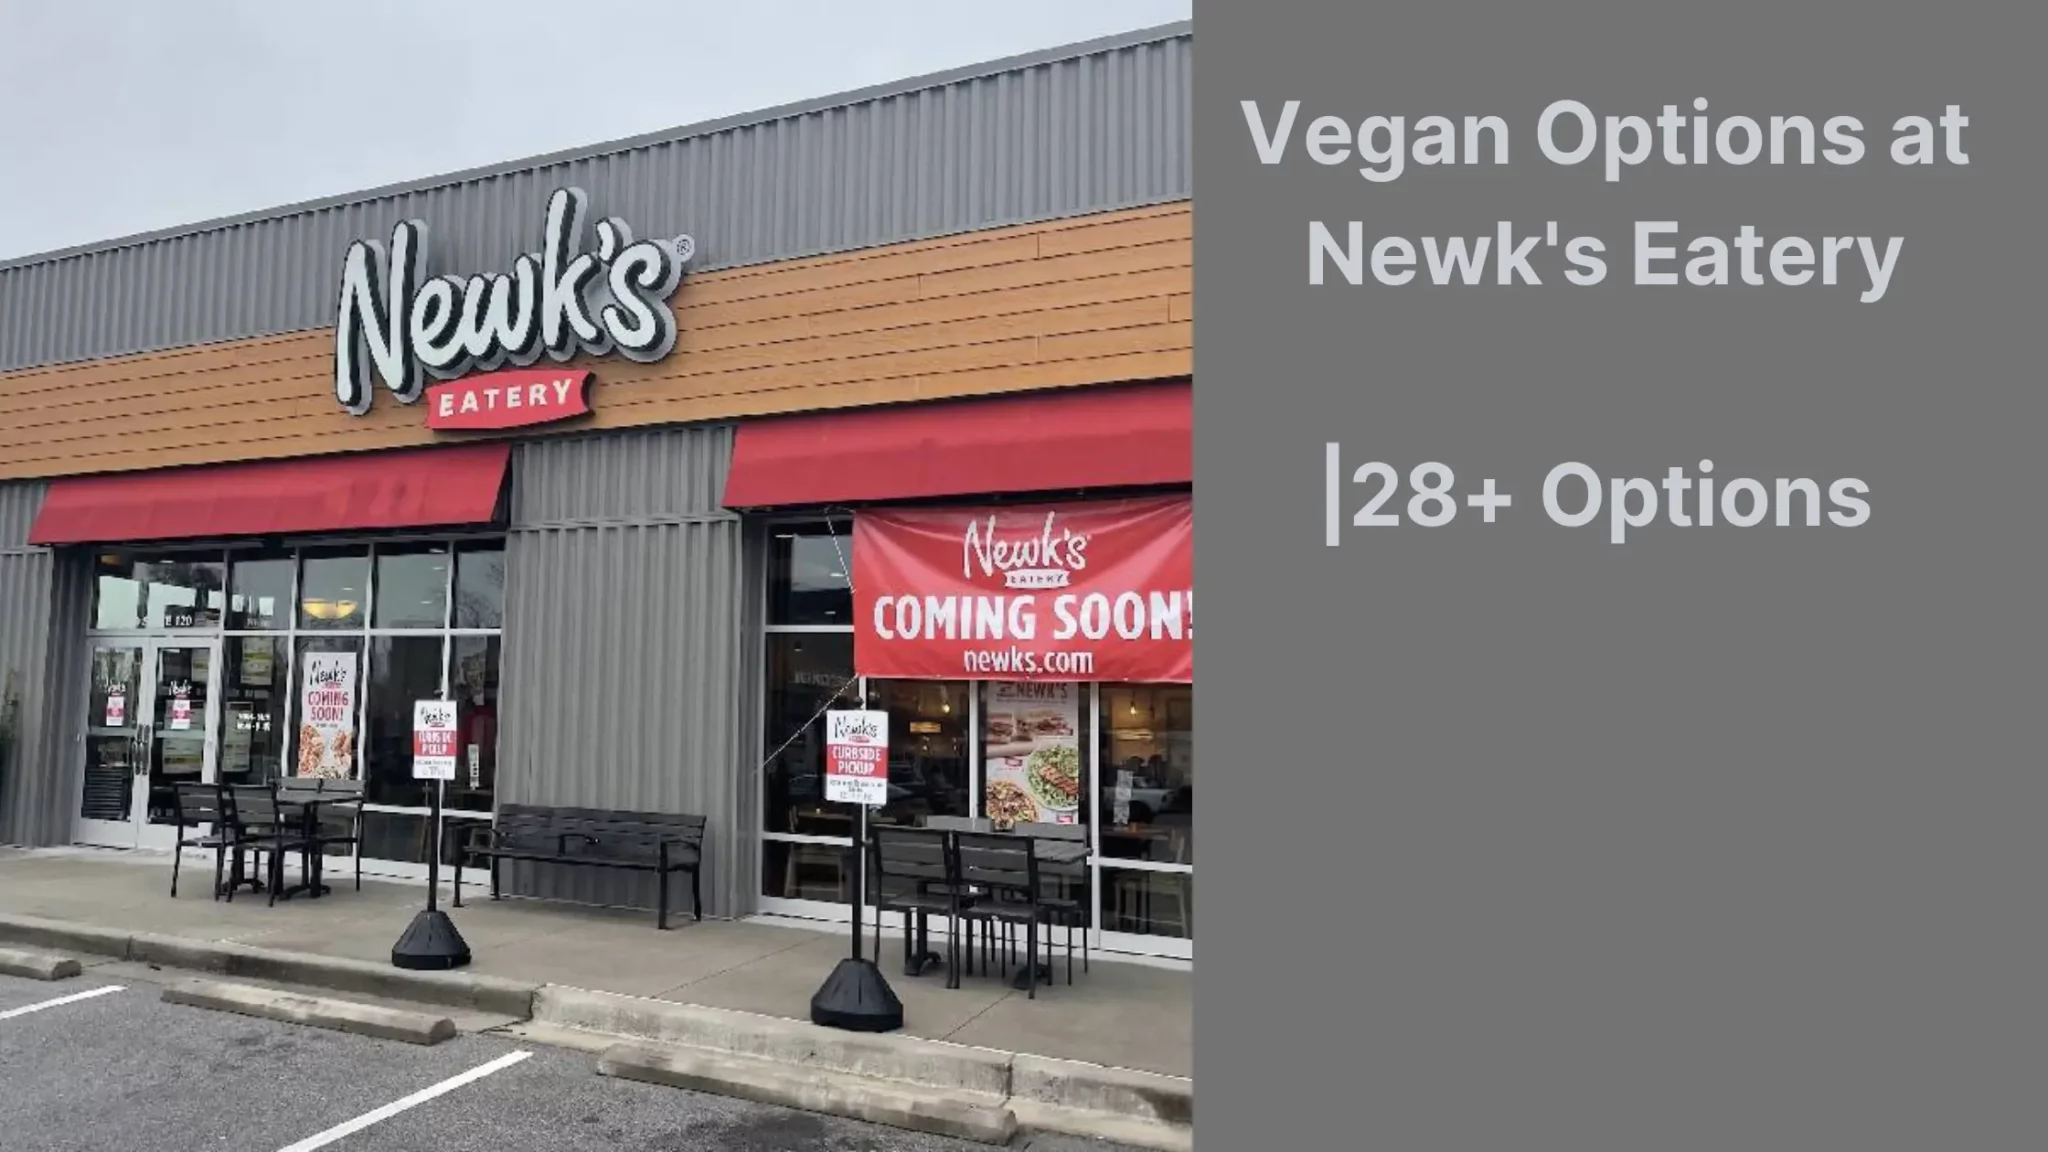 Vegan Options at Newk's Eatery